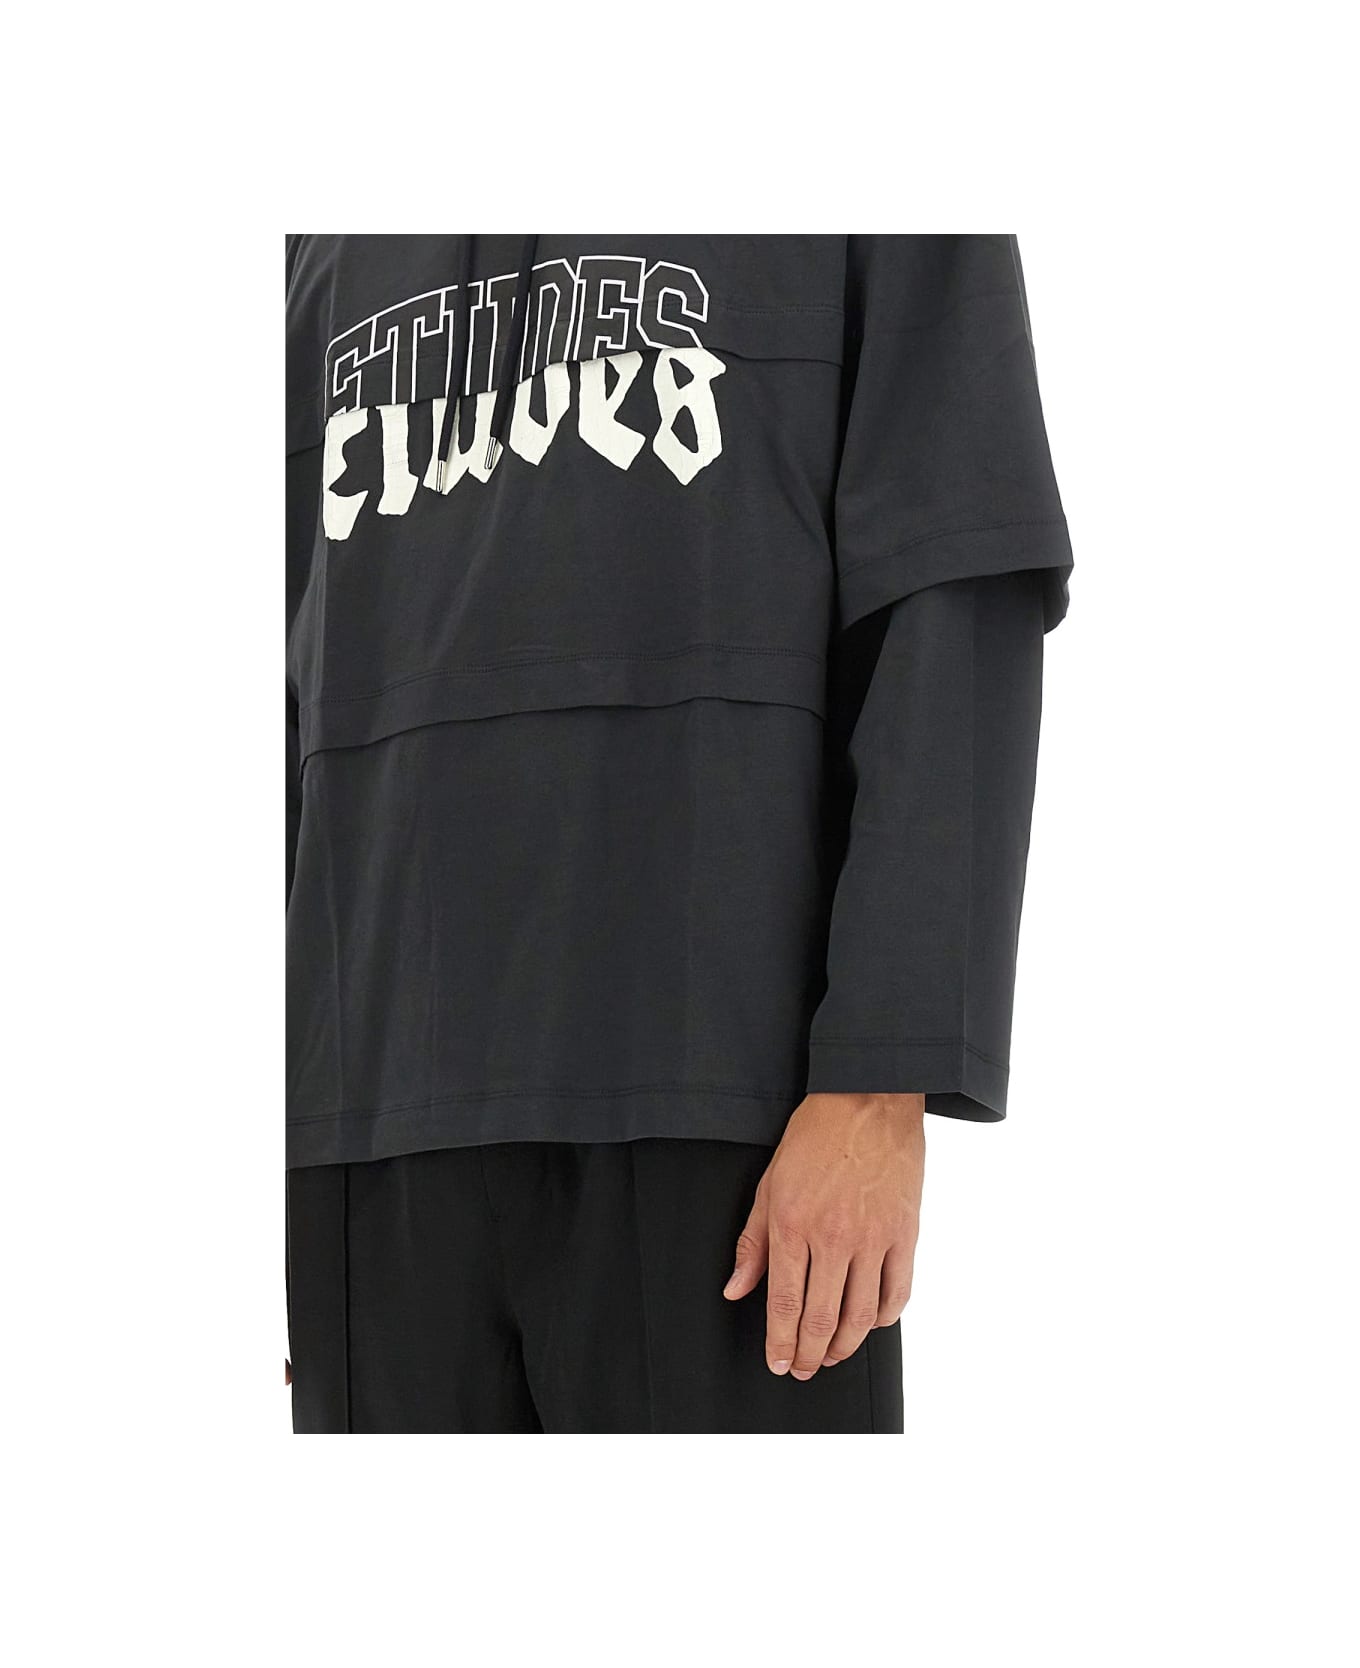 Études Sweatshirt With Logo - BLACK